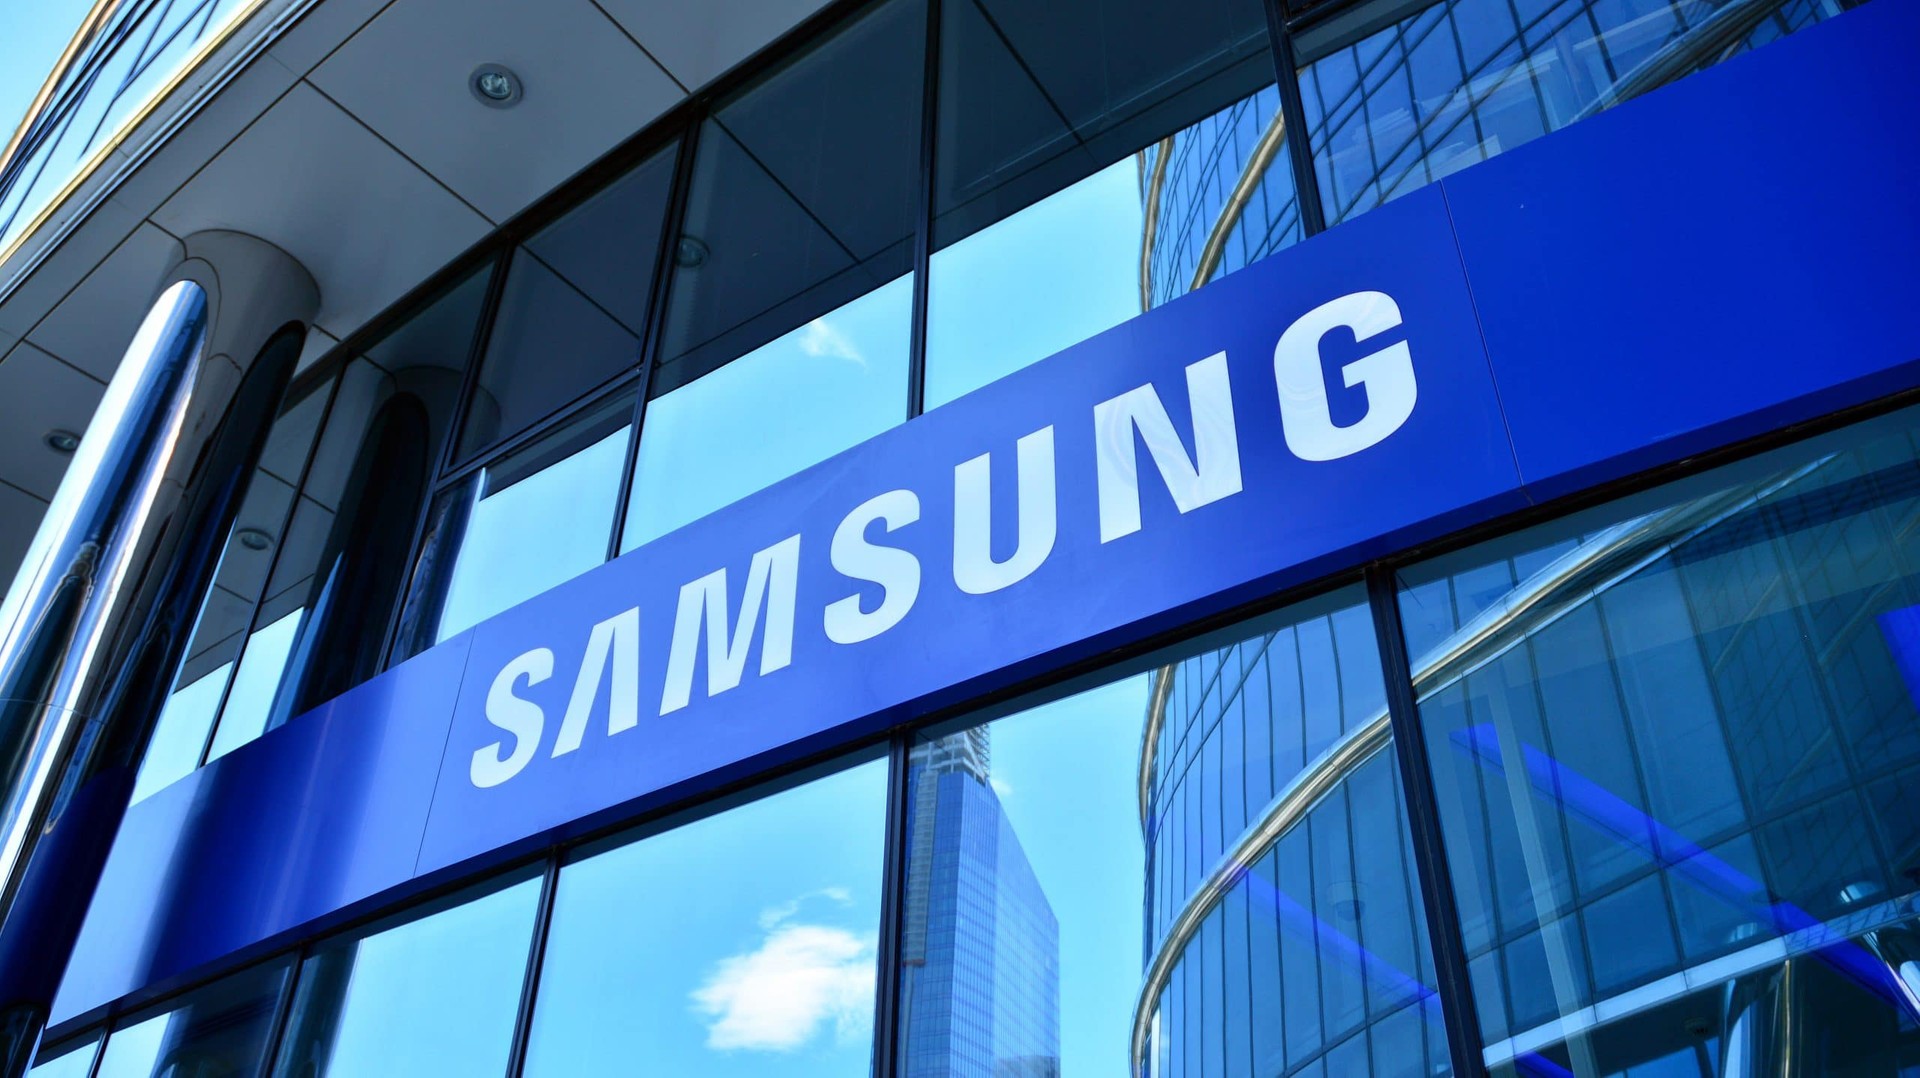 Samsung corta produo de chips na China aps novo lockdown para conter a Covid-19